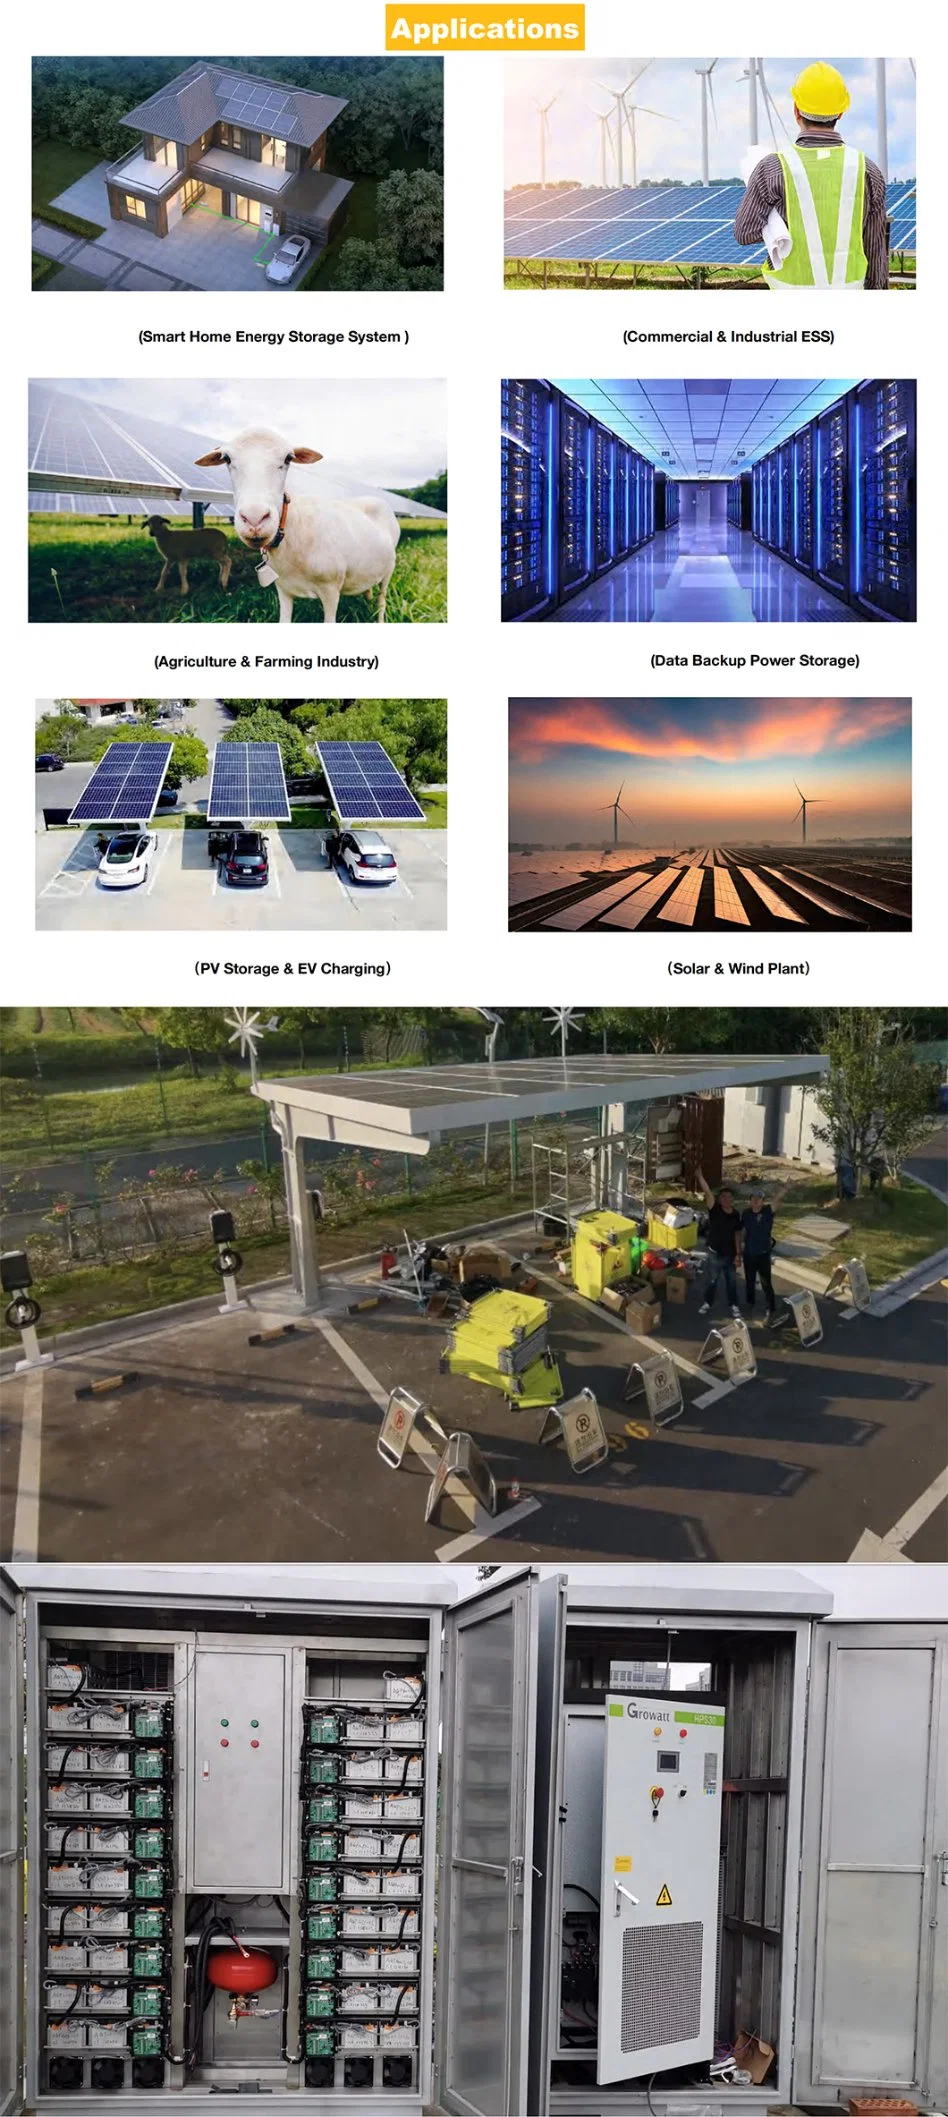 Home Fotovoltaic Solar Panel Alicosolar 5 Kw 6kw 10kw 10000 Watt Solar Montage System Hybrid House Warehouse Use Basic Customization